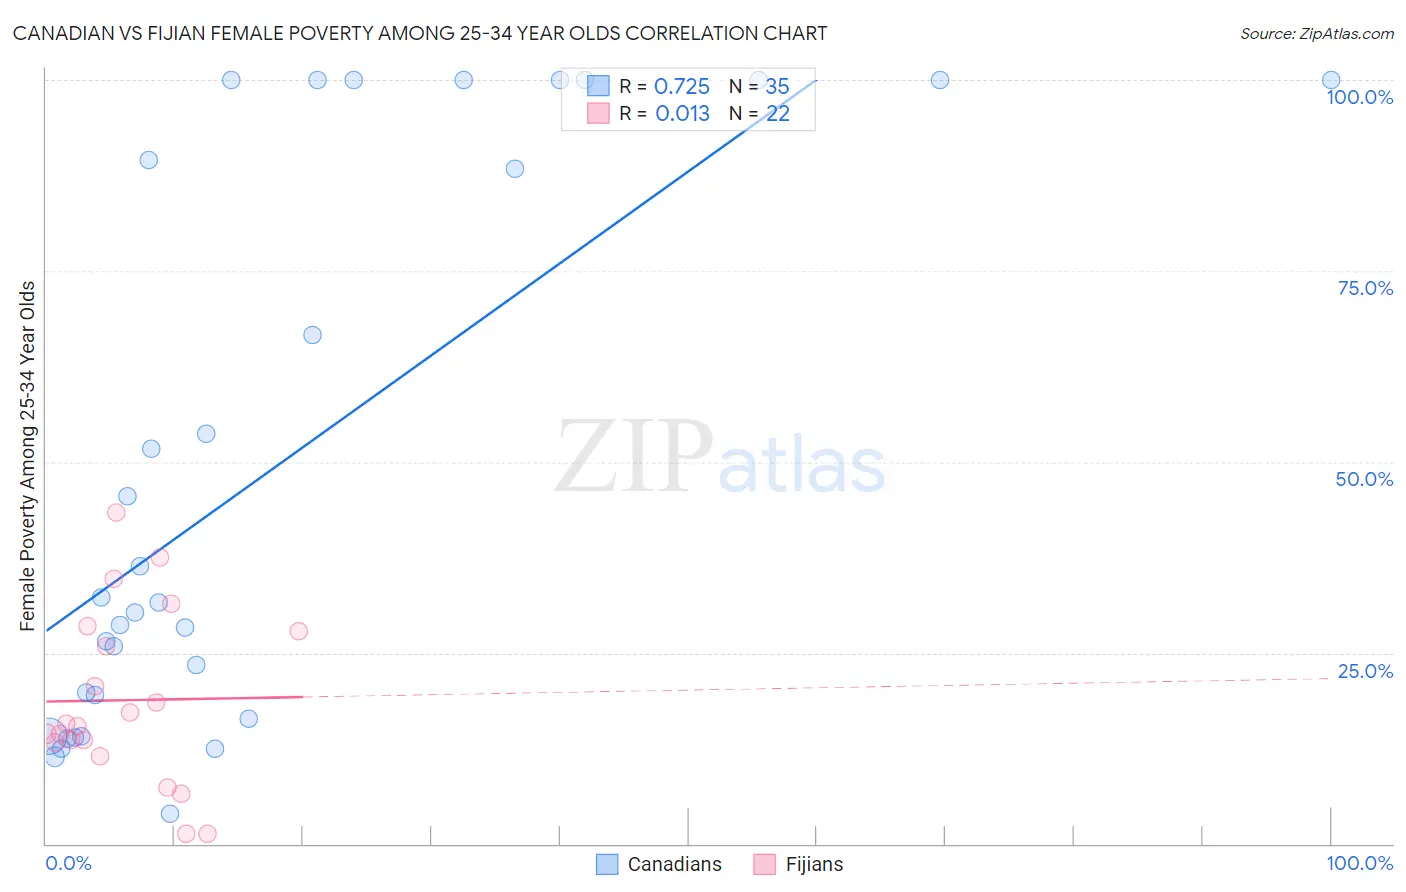 Canadian vs Fijian Female Poverty Among 25-34 Year Olds